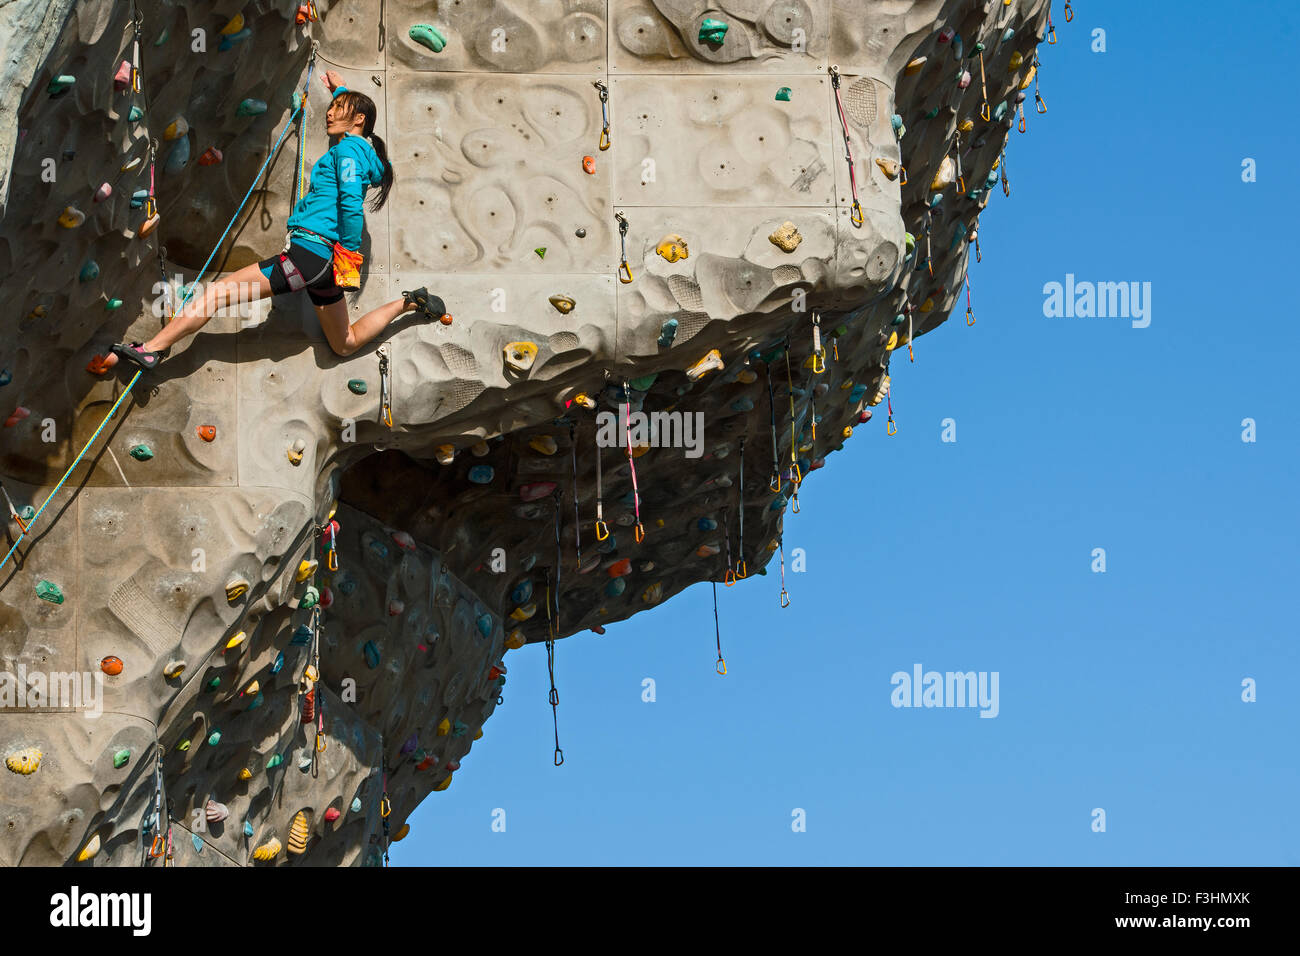 Woman climbing on artificial climbing wall in Seoul Stock Photo - Alamy